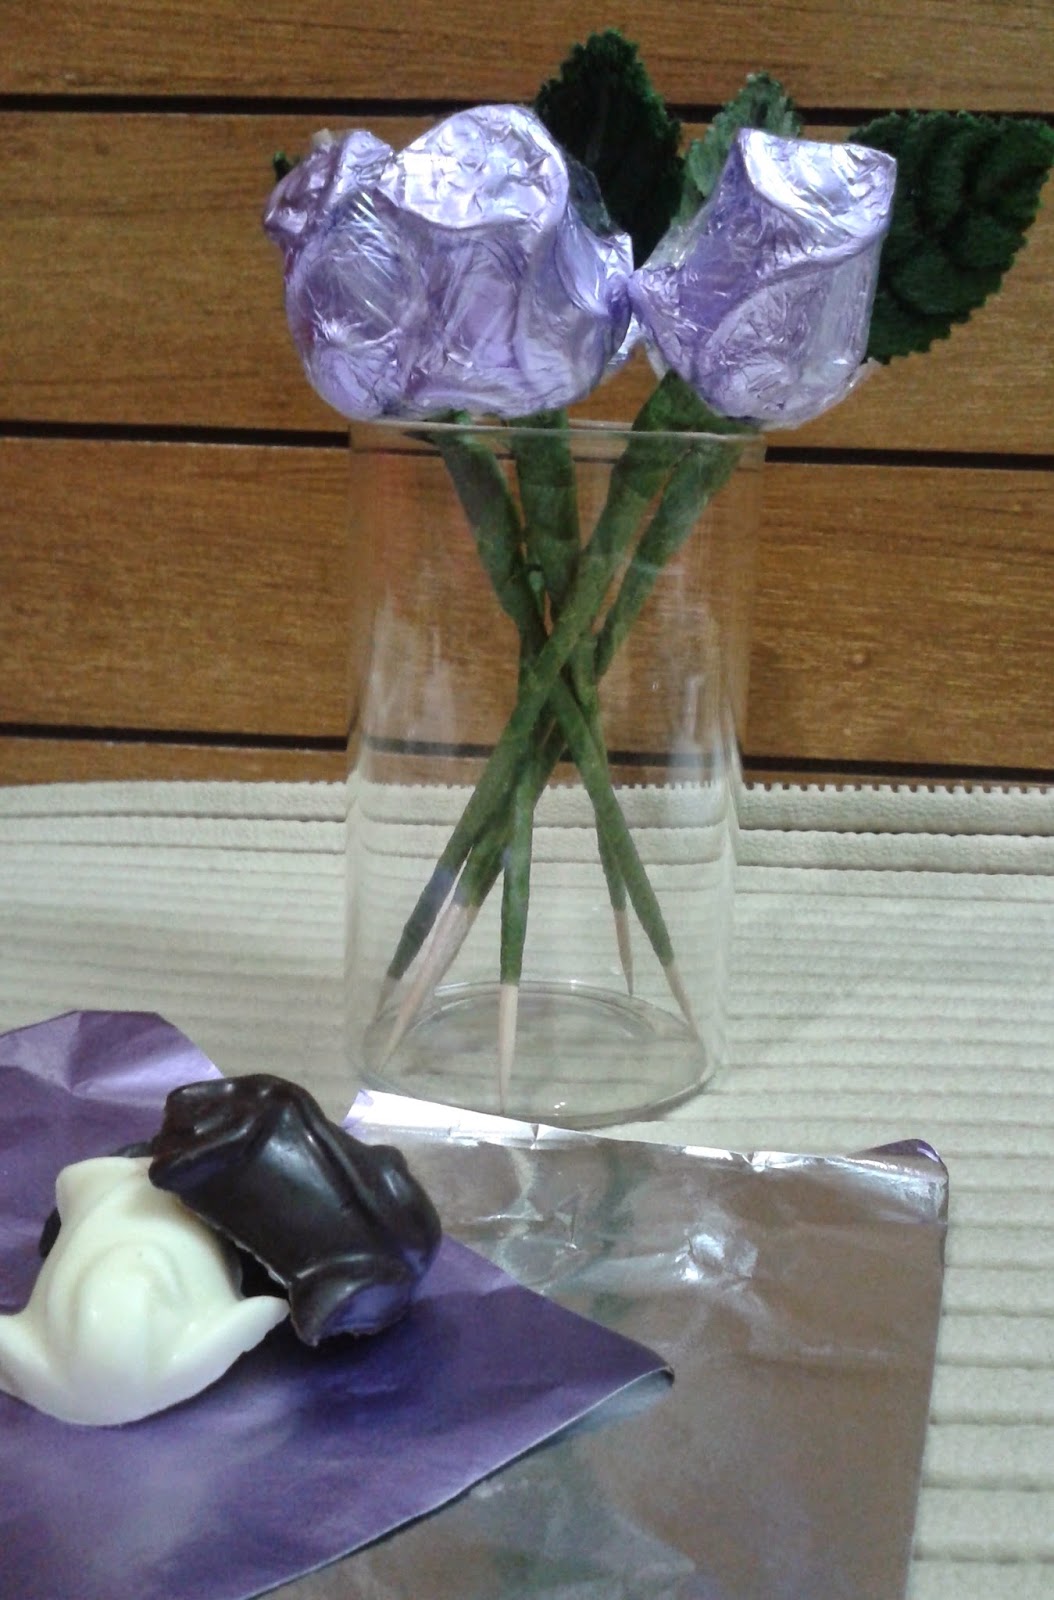 http://www.paakvidhi.com/2015/03/chocolate-bouquet.html